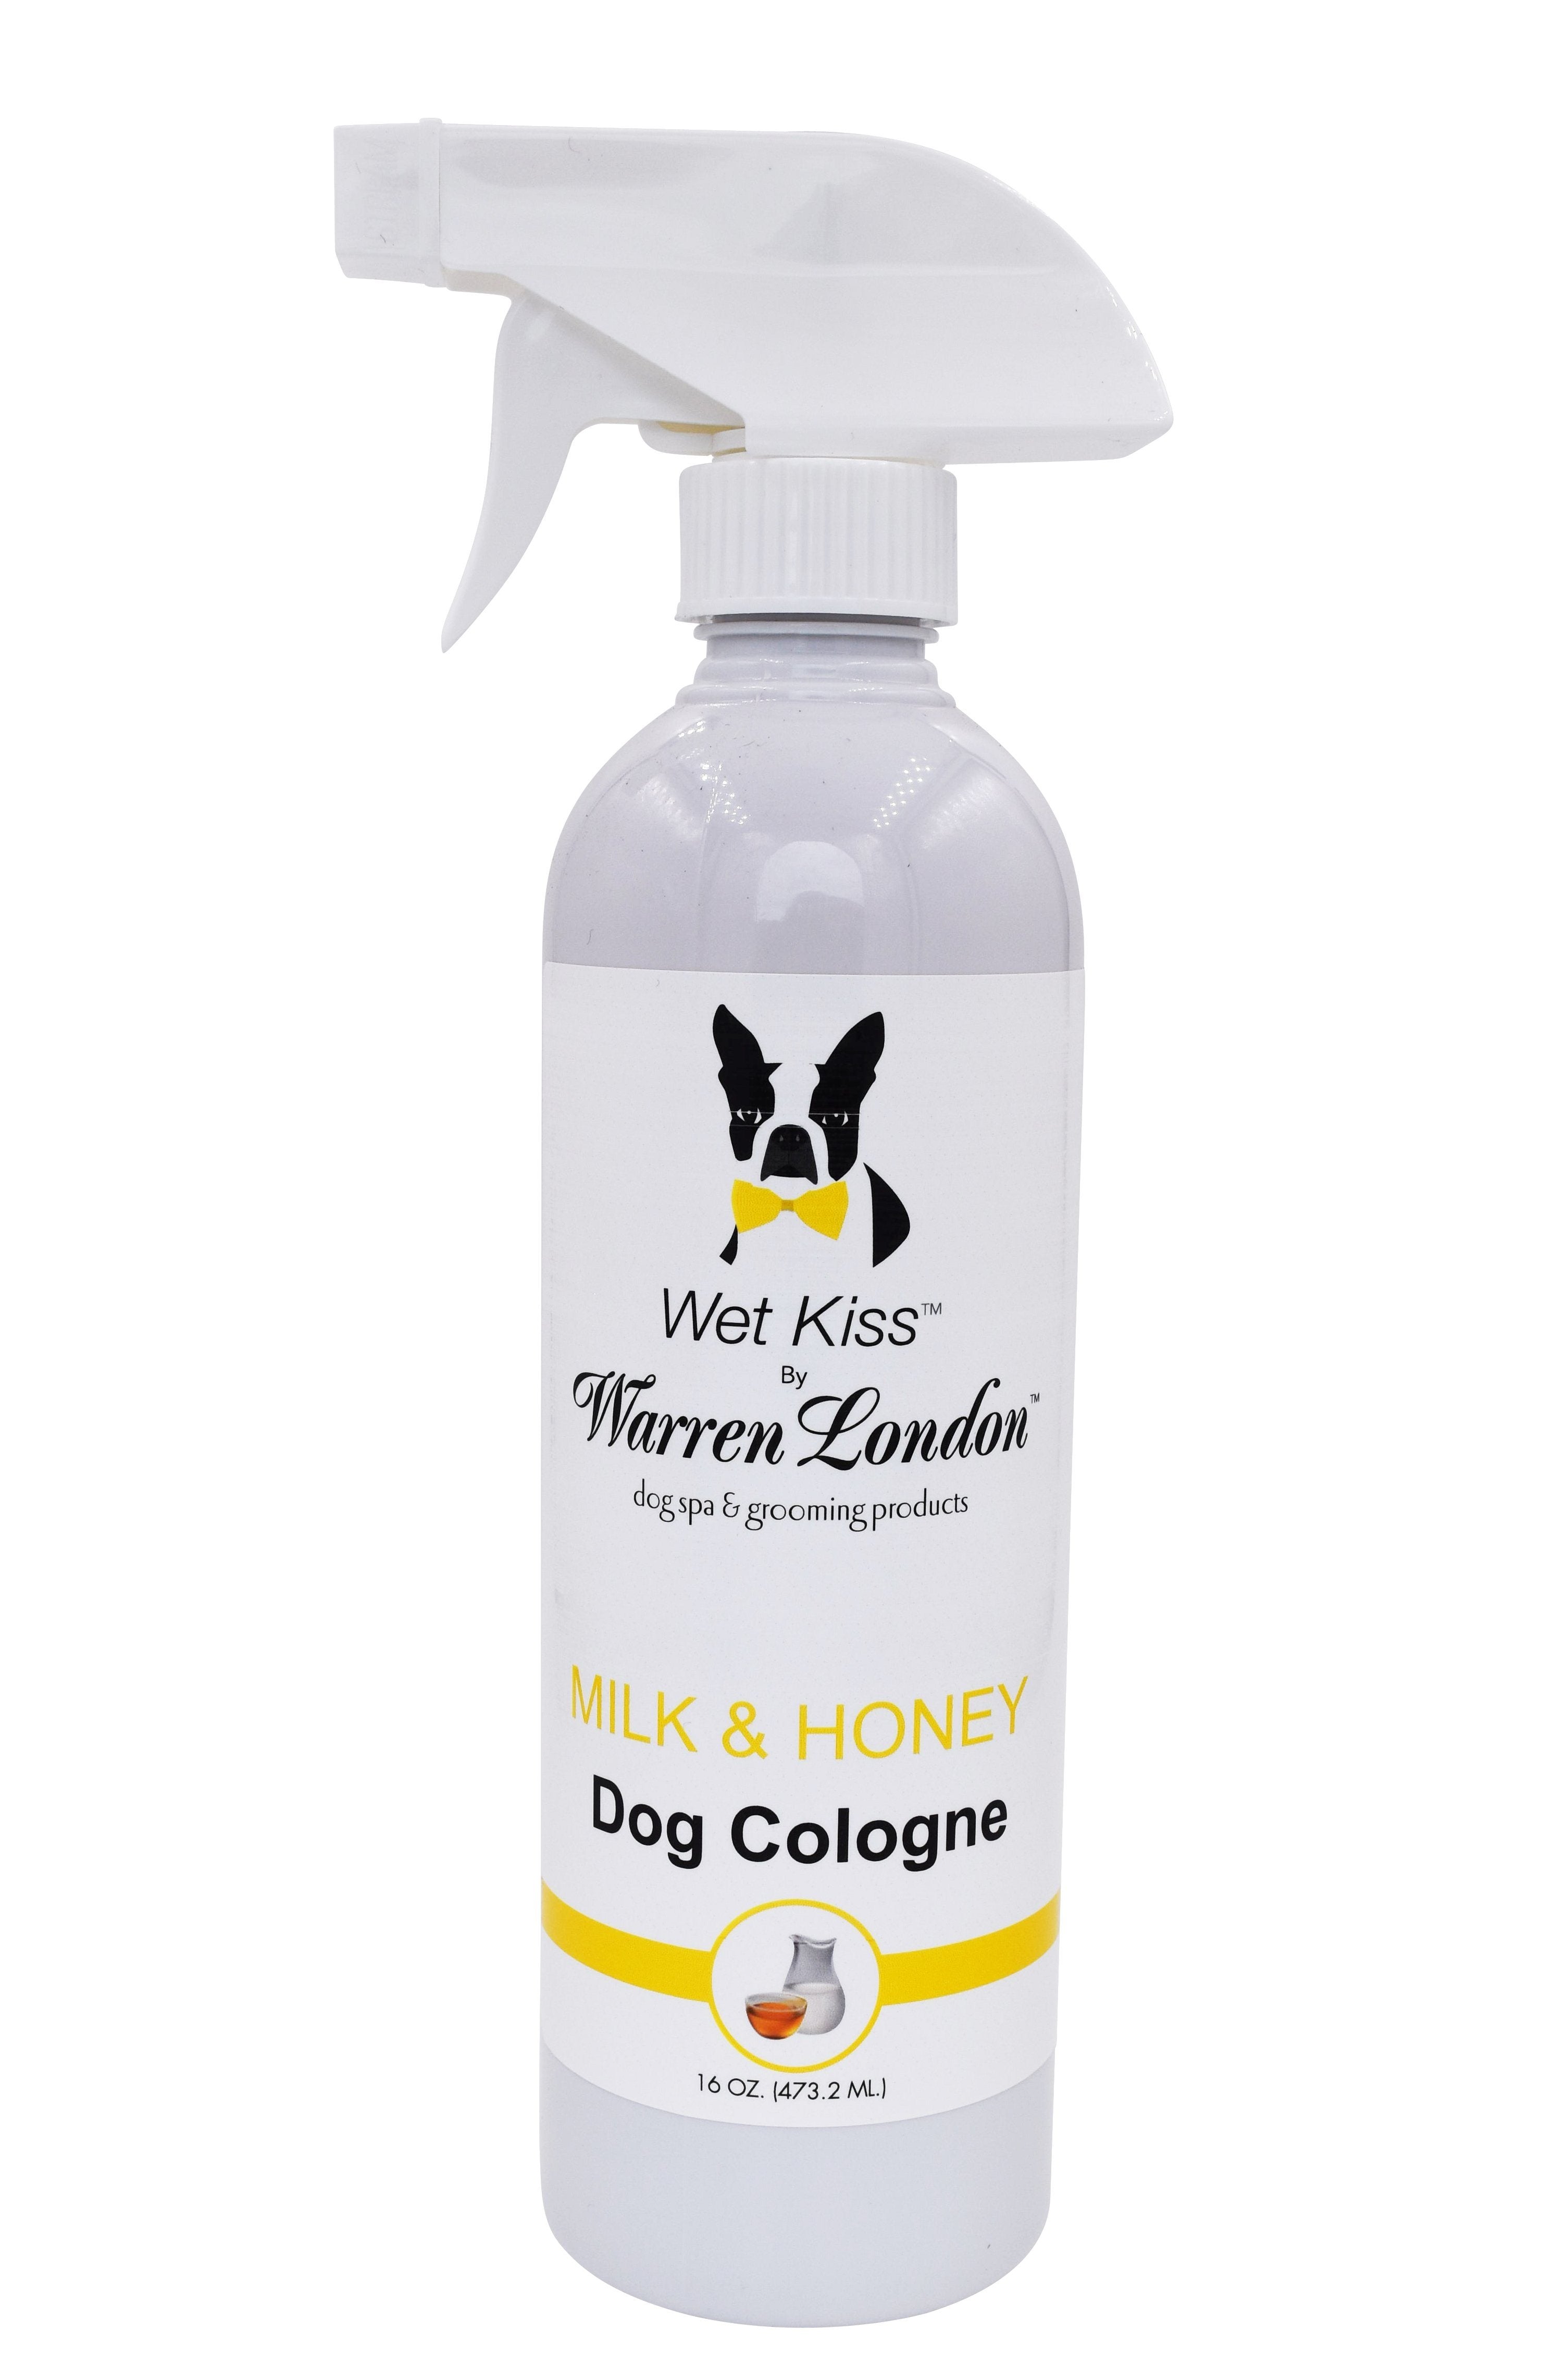 Wet Kiss Dog Cologne By Warren London - 2 Oz or 16 Oz Spa Product Warren London Milk & Honey 16oz 